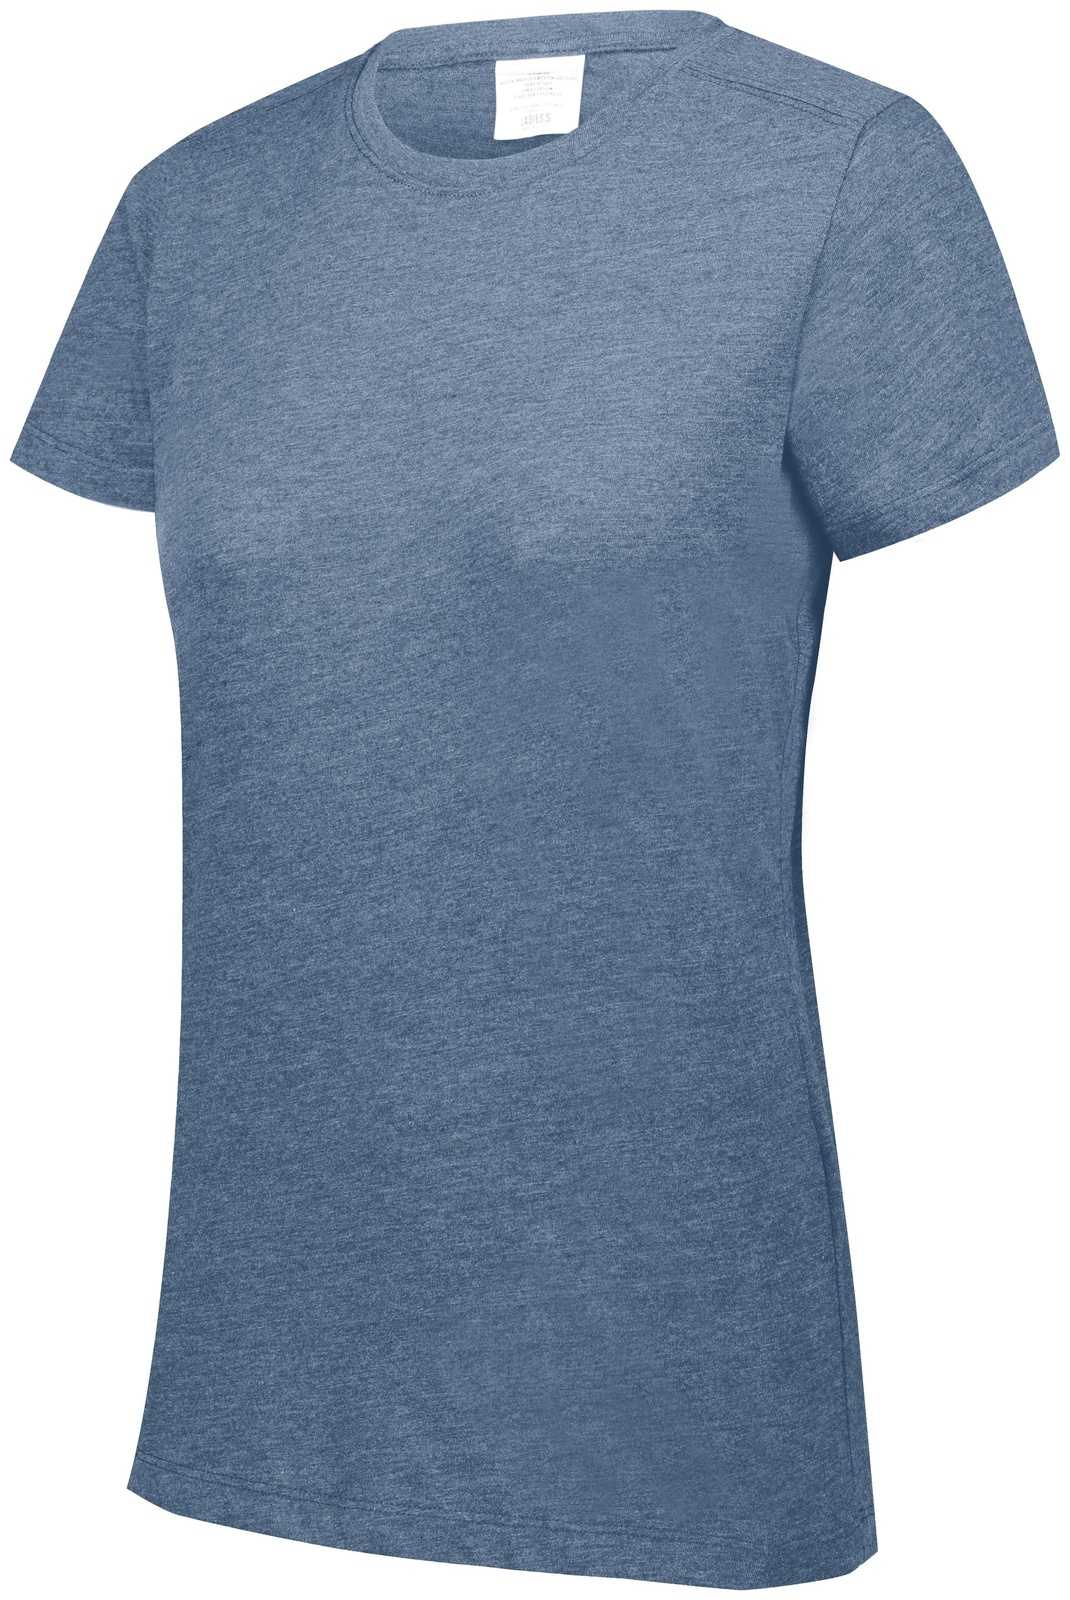 Augusta 3067 Ladies Tri-Blend T-Shirt - Storm Heather - HIT a Double